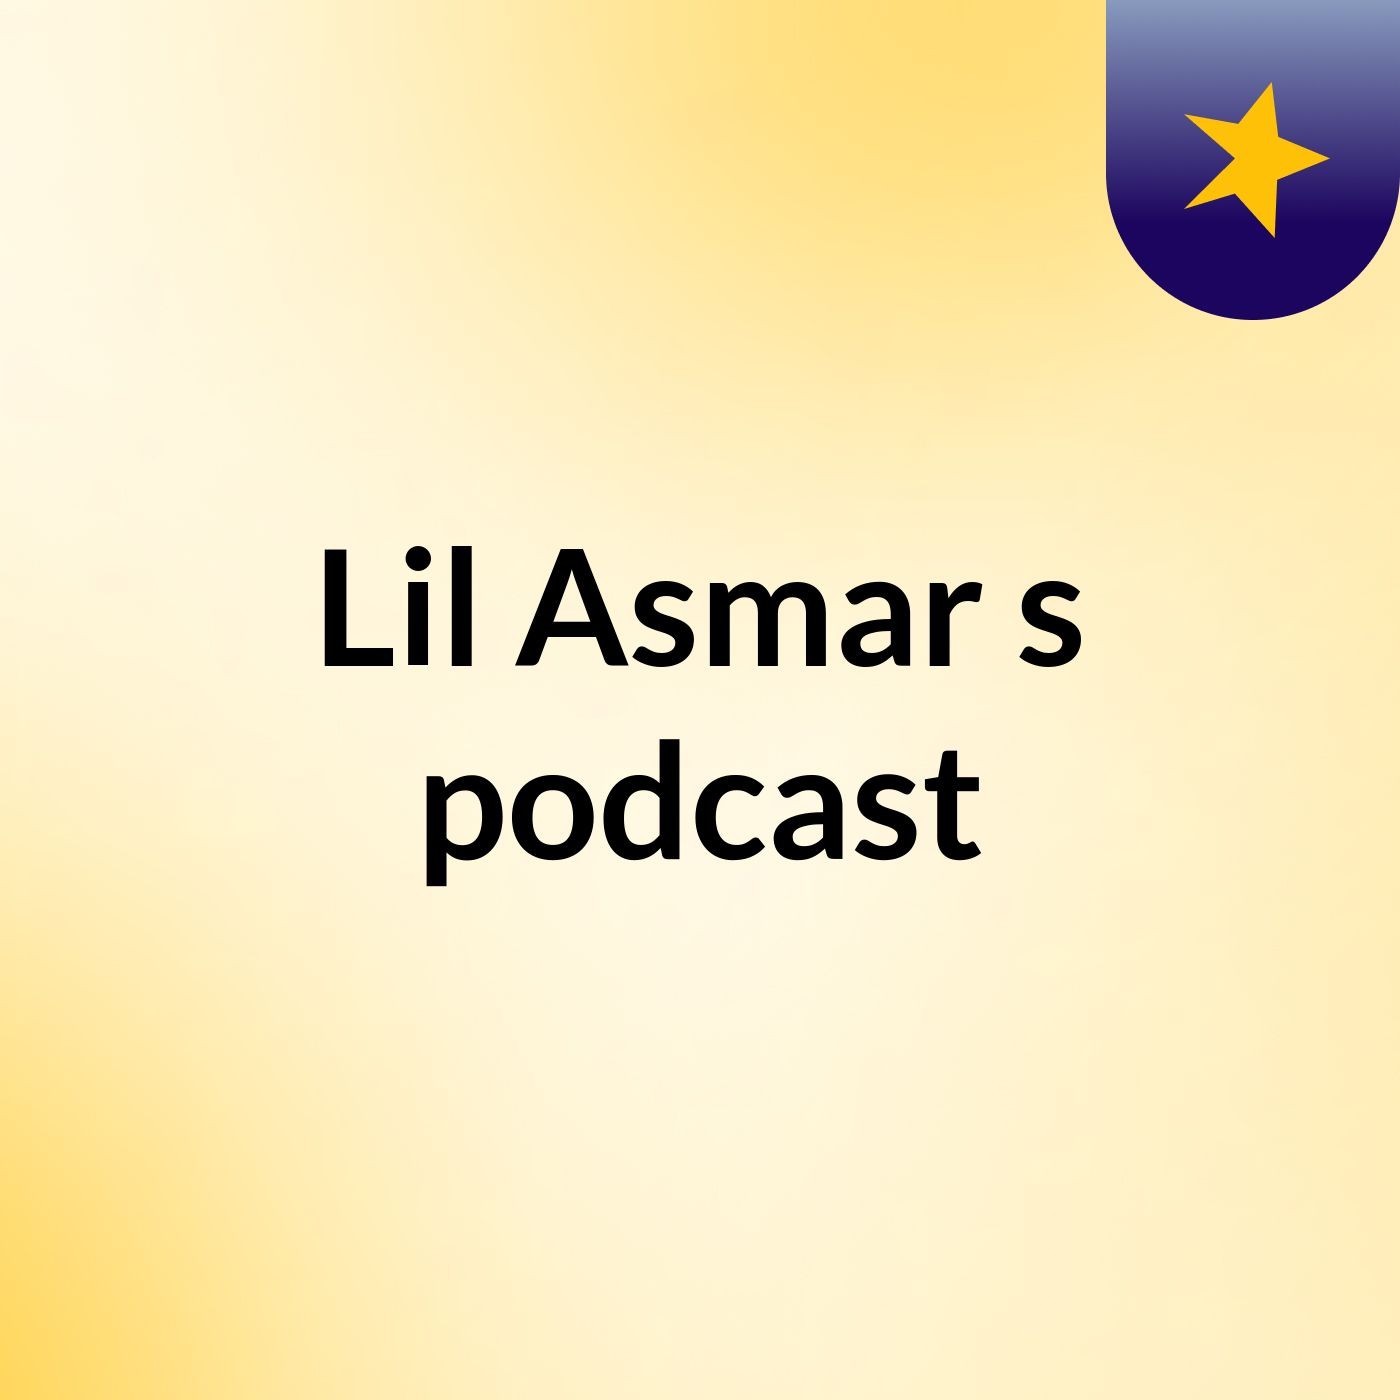 Lil Asmar's podcast